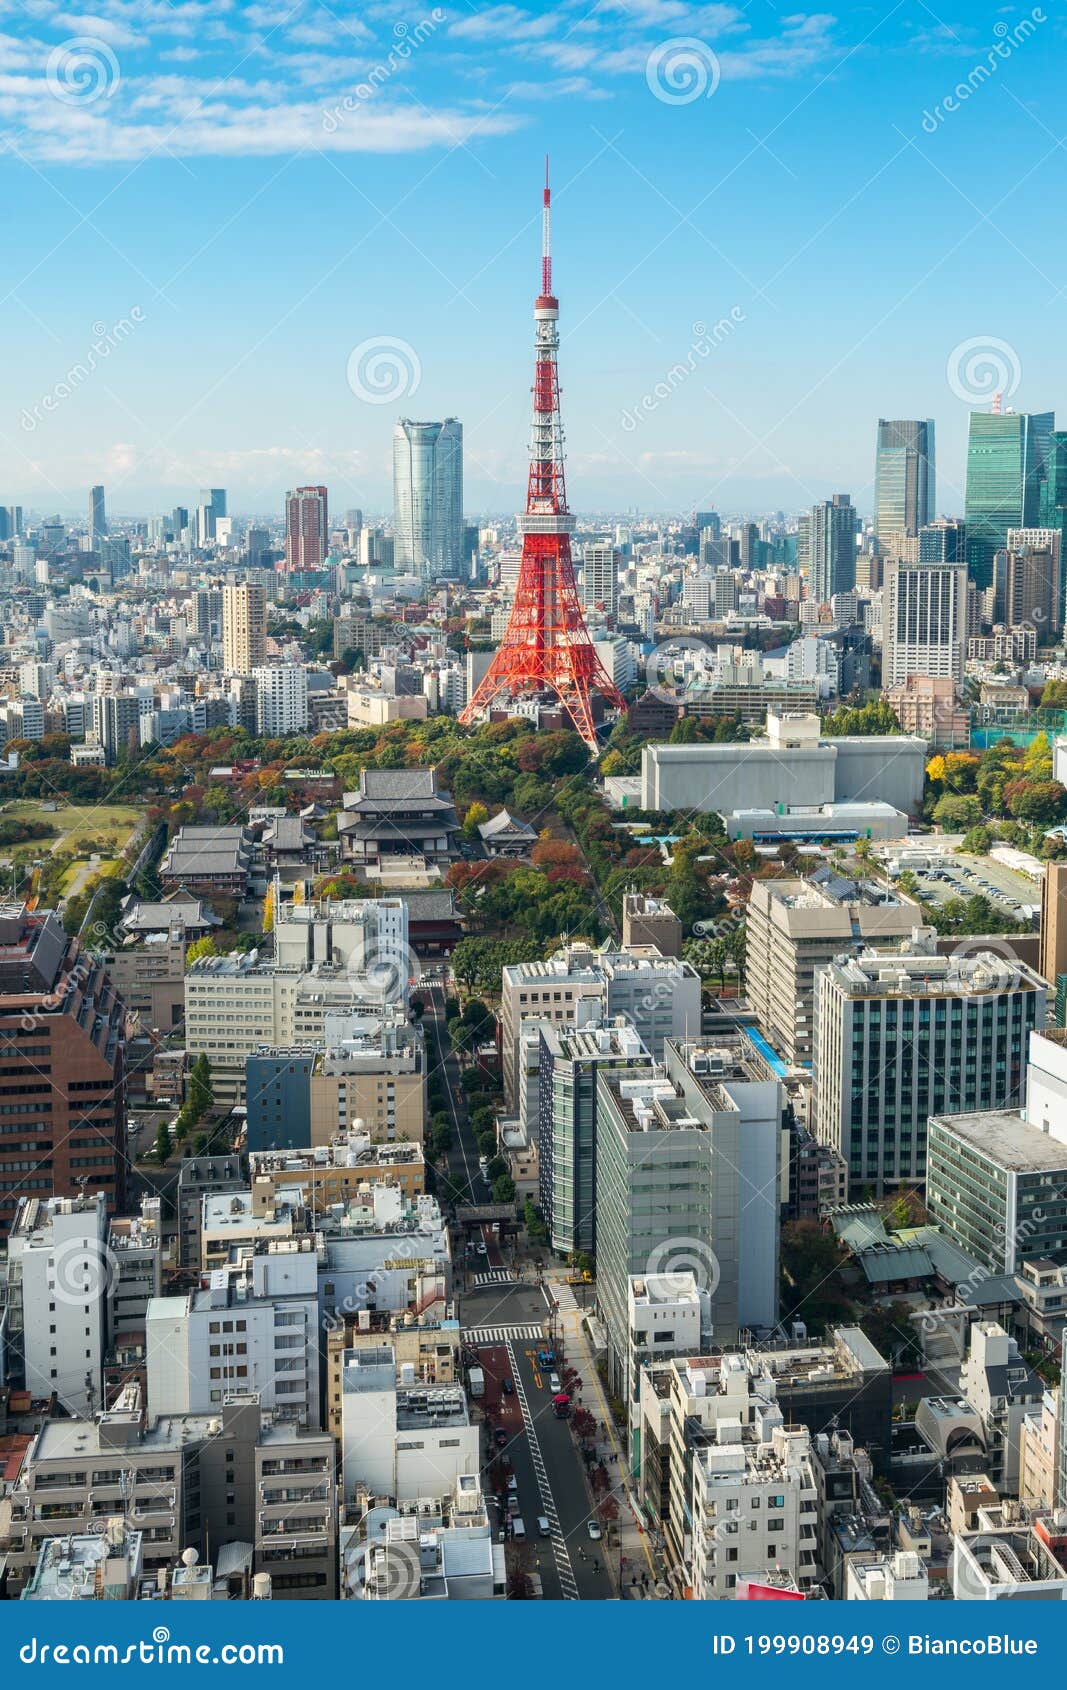 tokyo city skyline